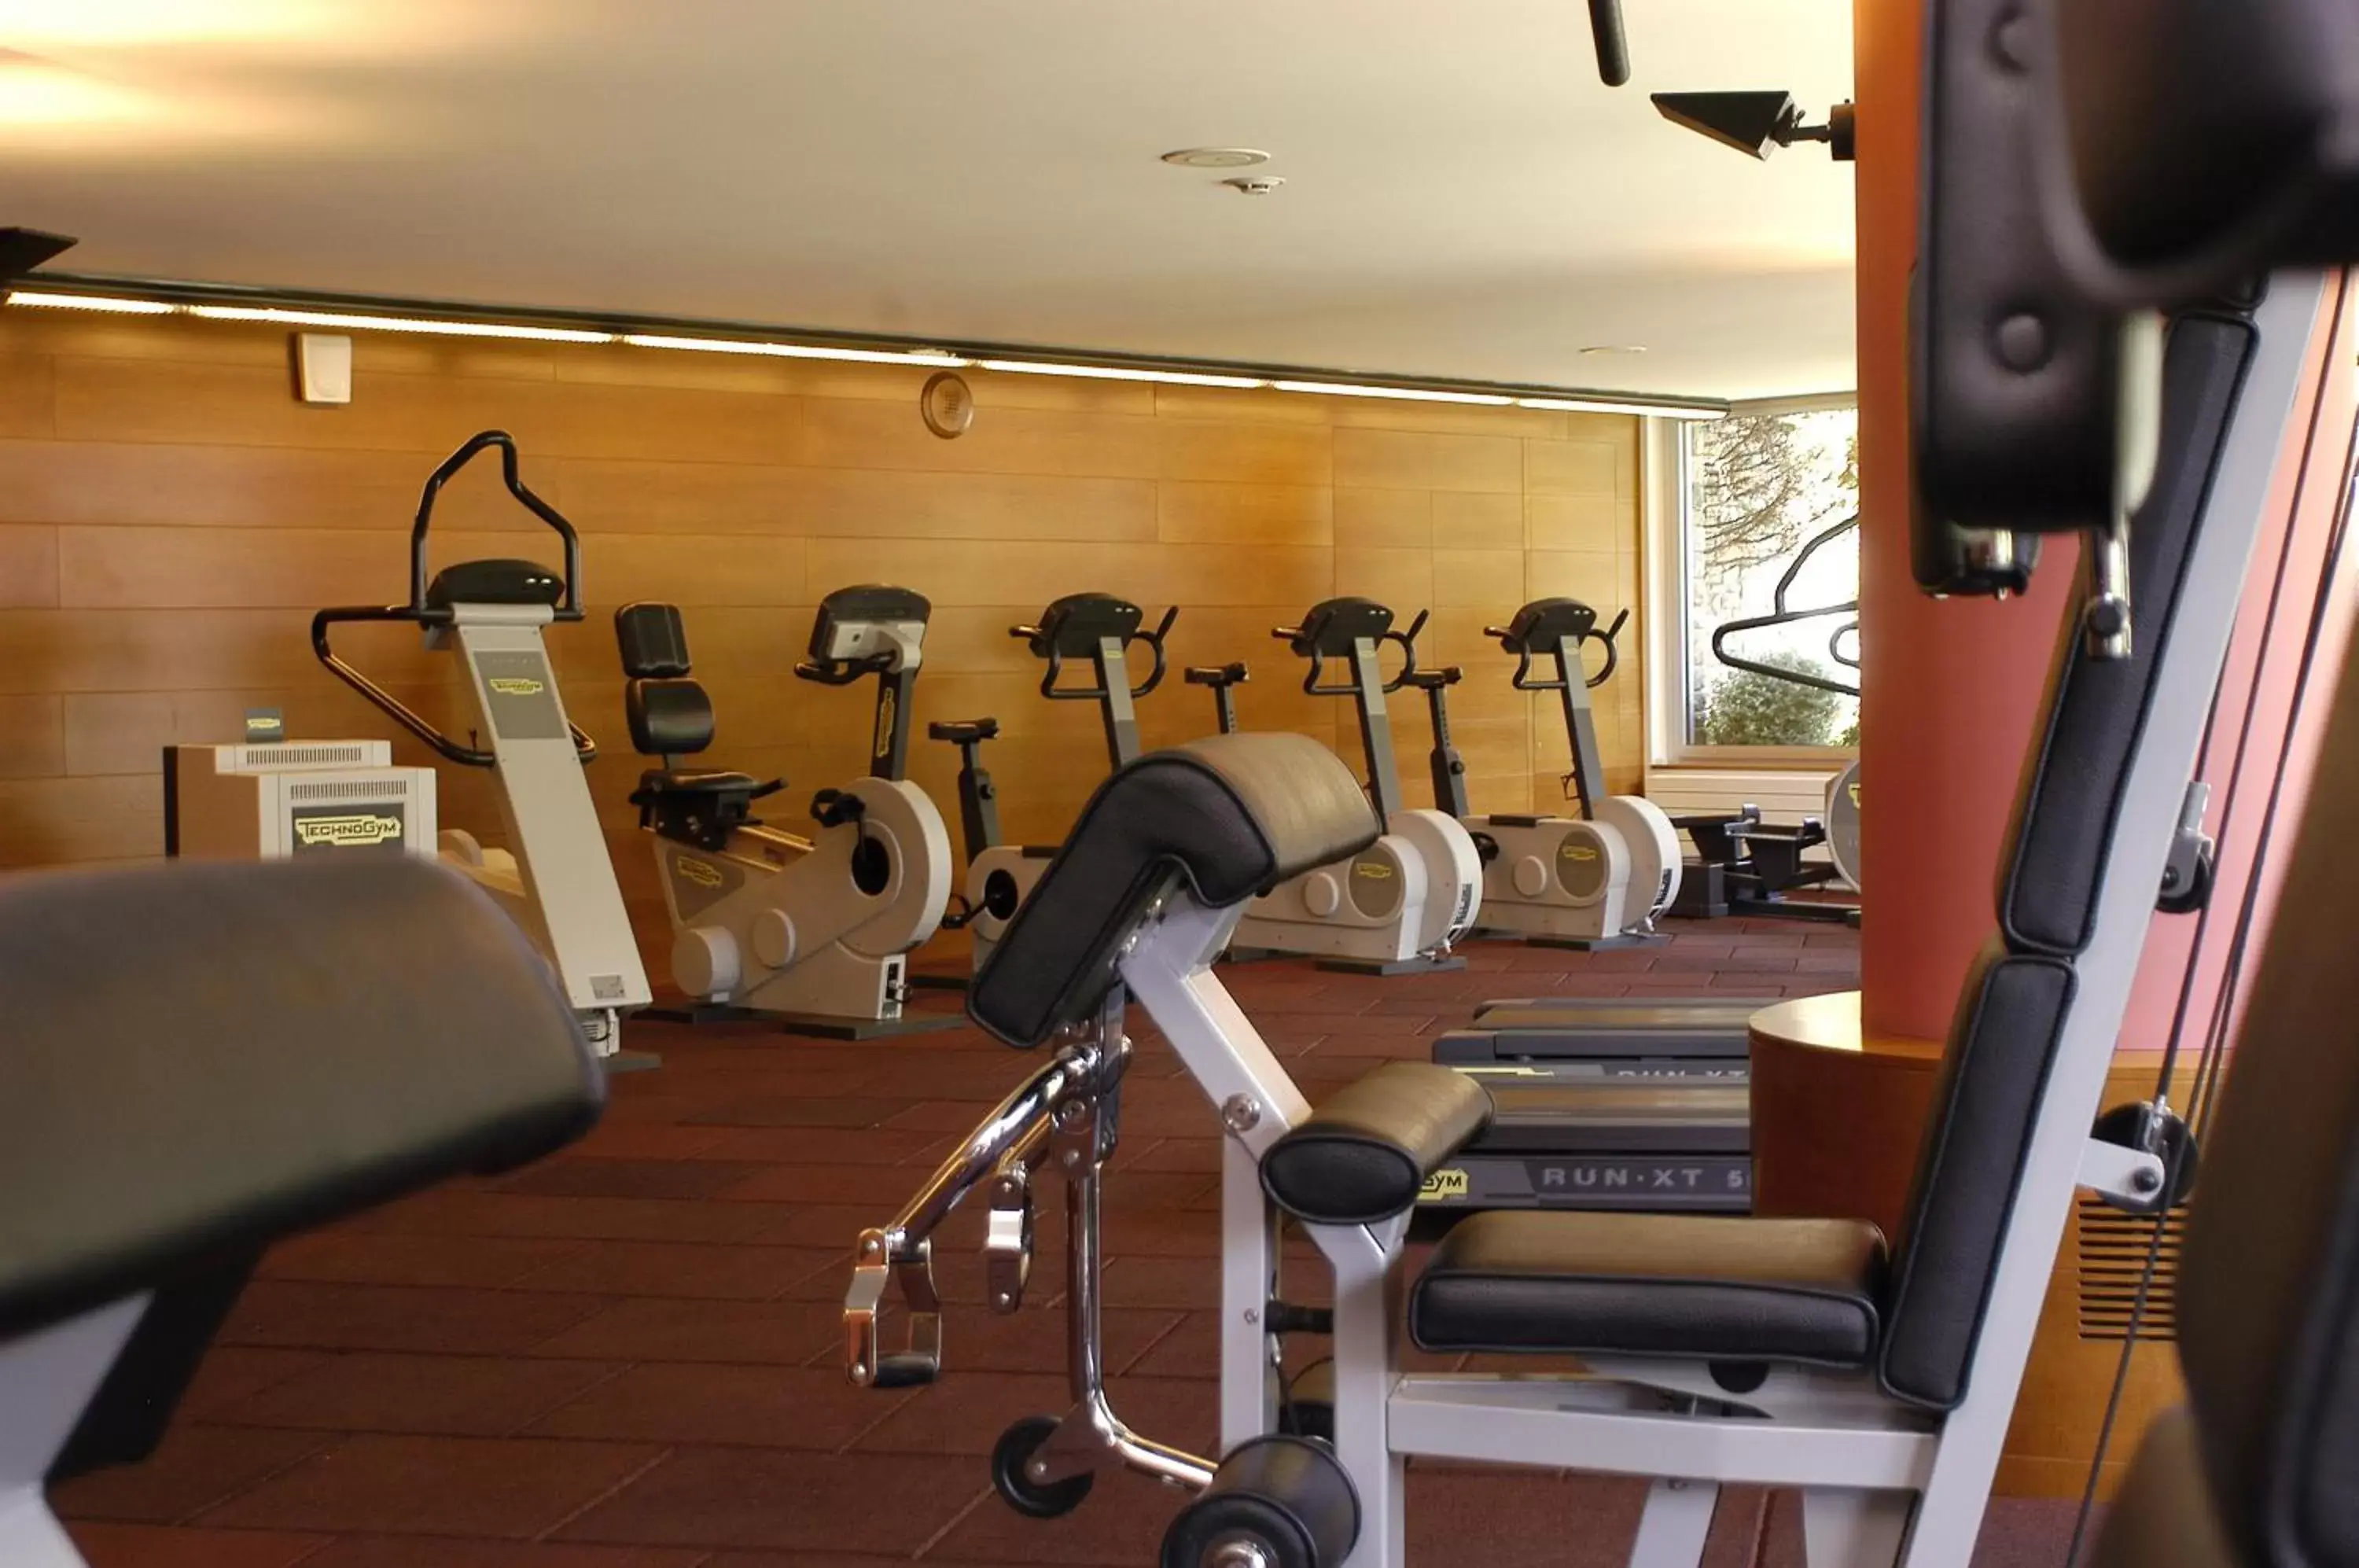 Fitness centre/facilities, Fitness Center/Facilities in Mercure Andorra